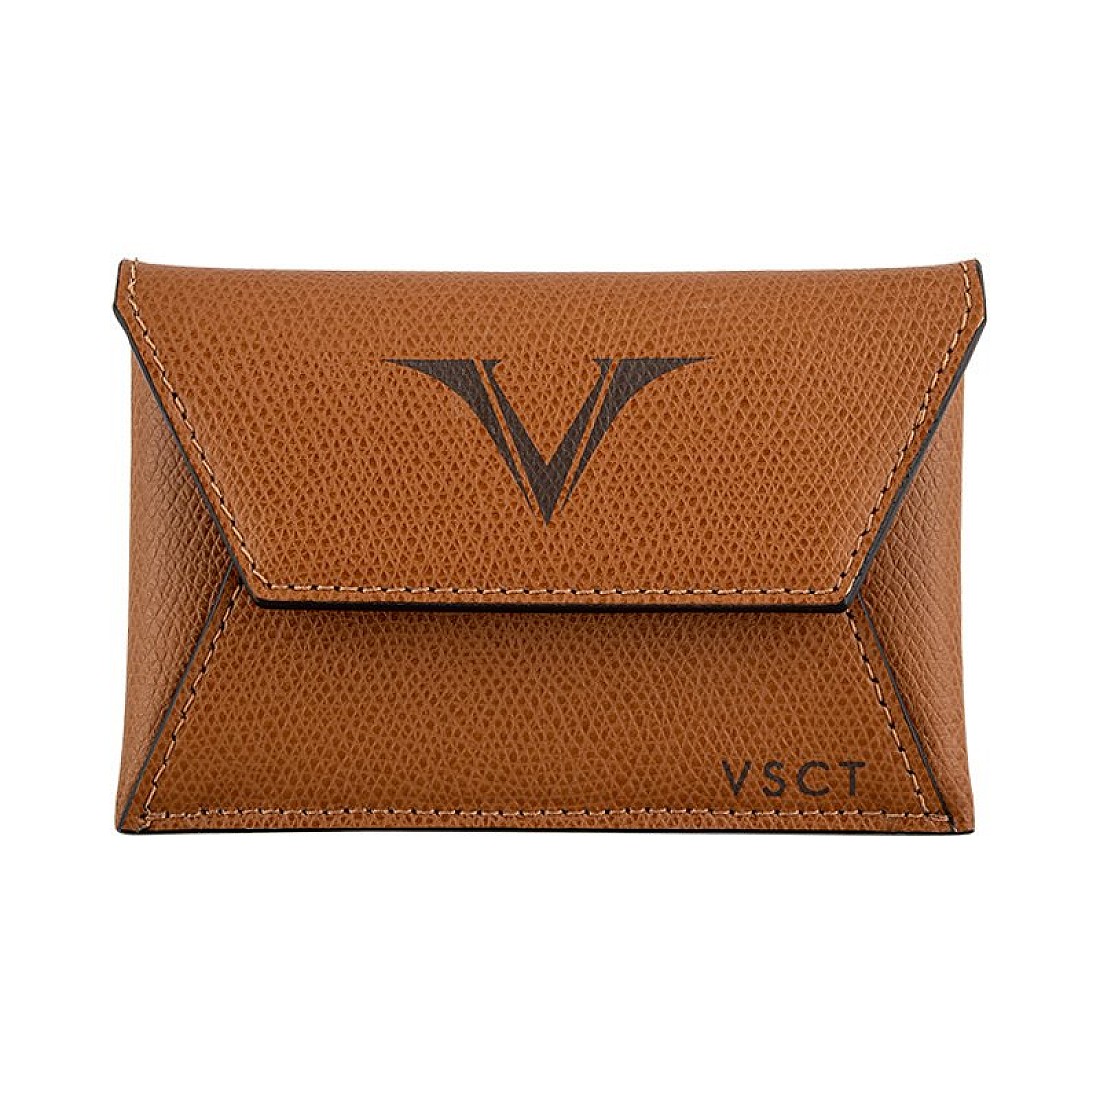 Haalbaar luister Poort Visconti VSCT Credit Card Envelope Cognac - Creditcard-houder / Credit Card  Holder | Appelboom.com